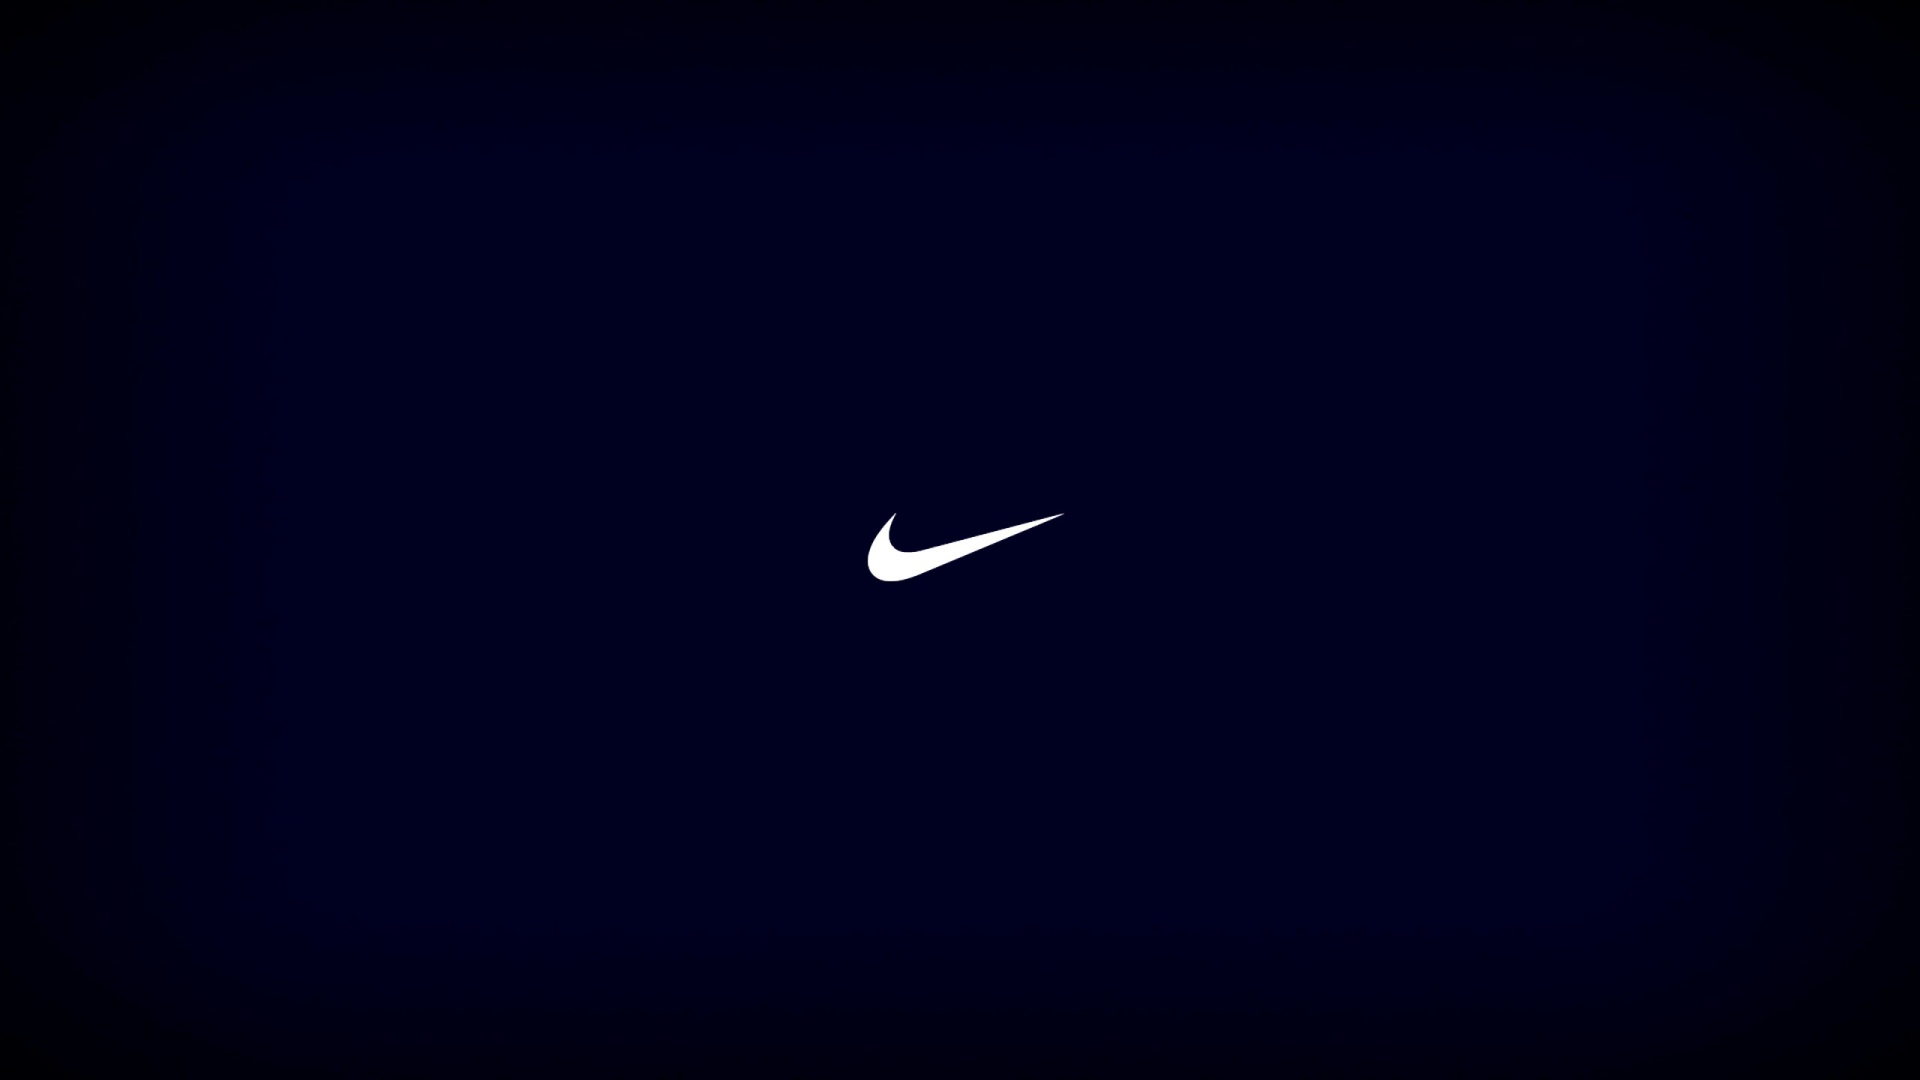 Nike Logo Design Wallpaper Picture High